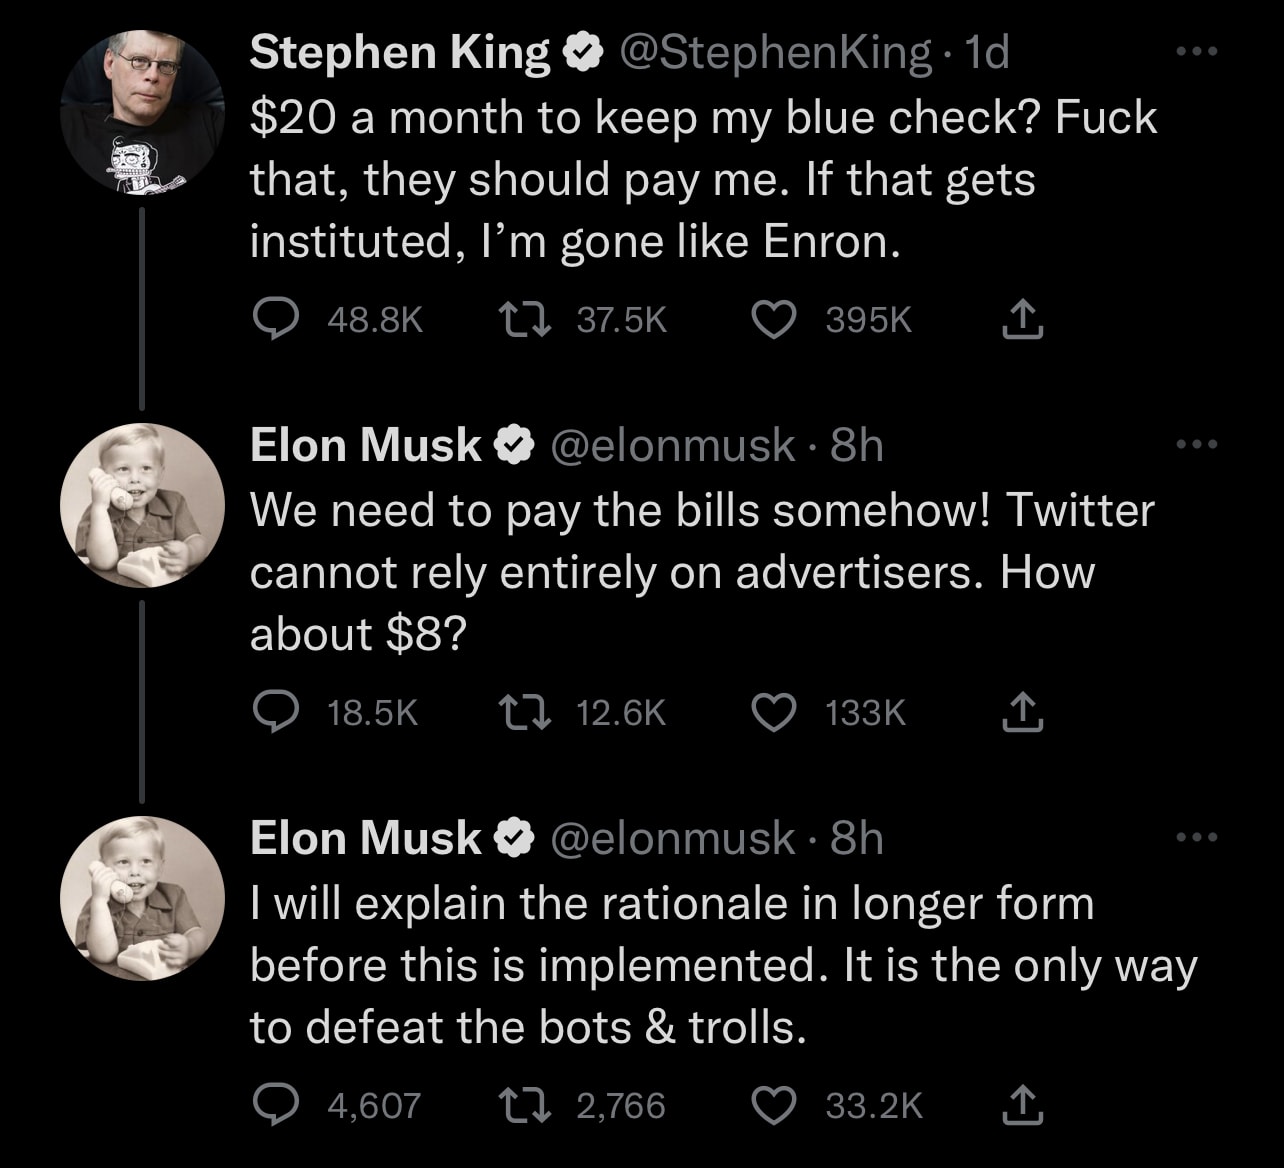 Stephen King and Elon Musk talk on Twitter